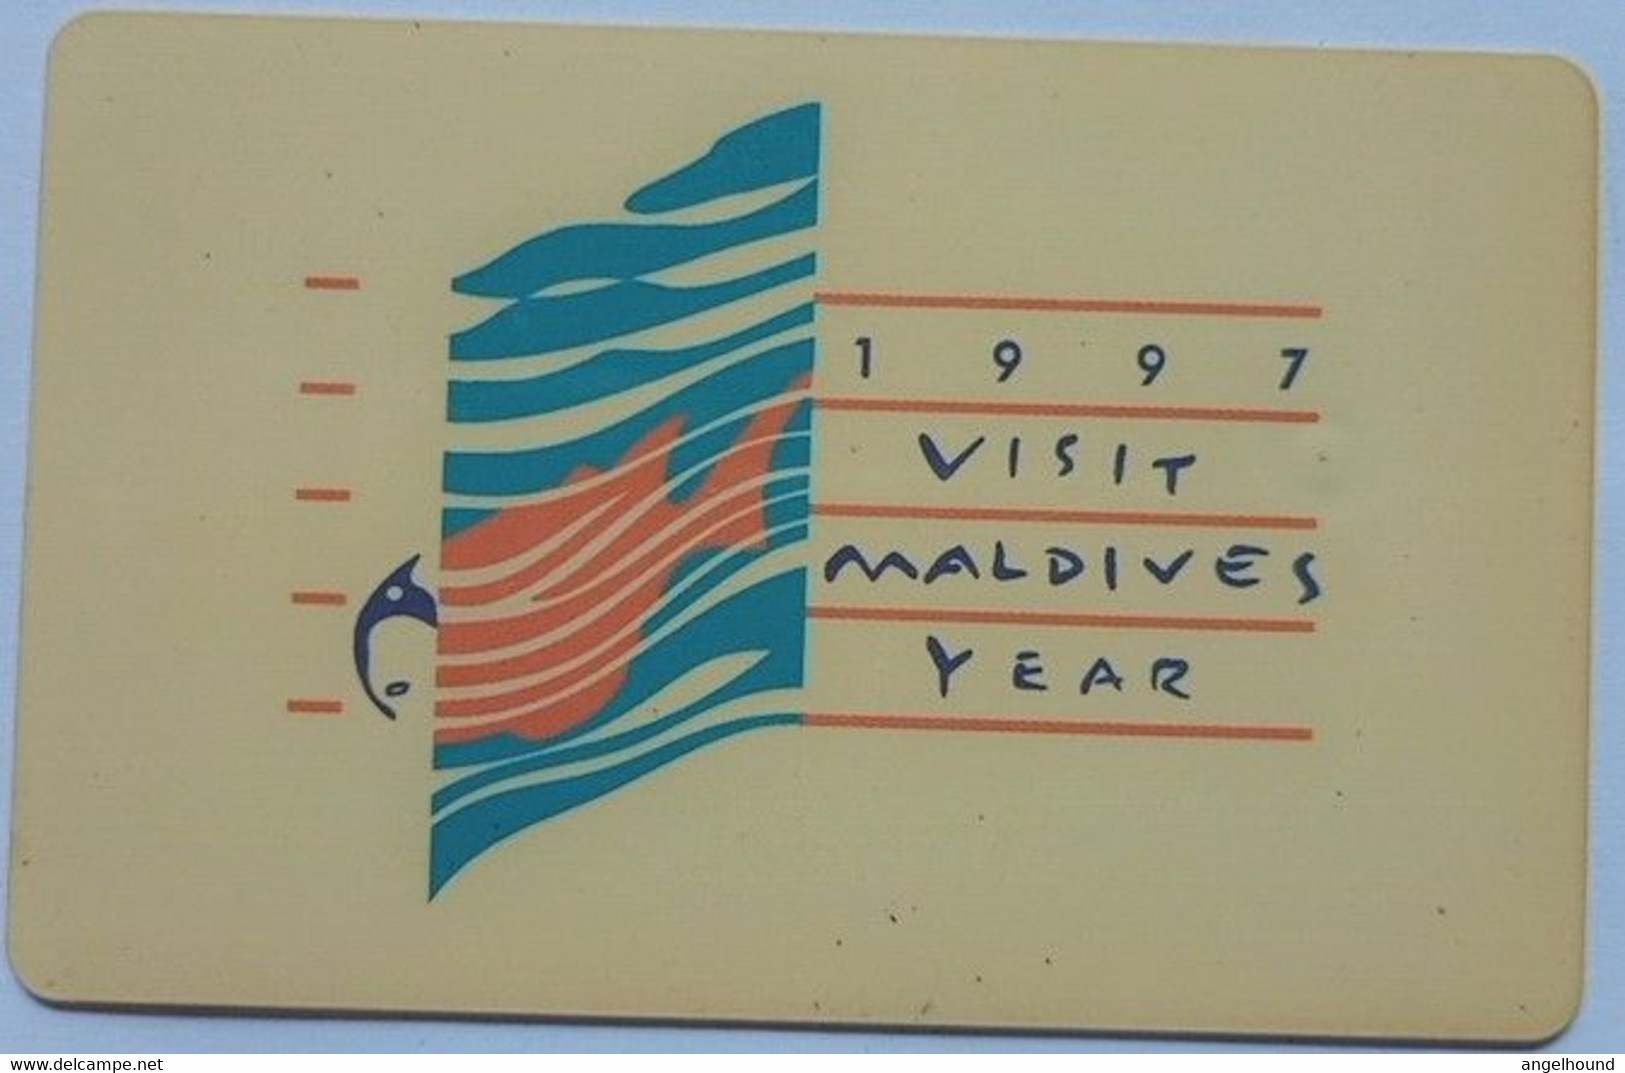 Maldives Chip Card Rf.30, 90MLDGIA " Save The Turtle " - Maldives